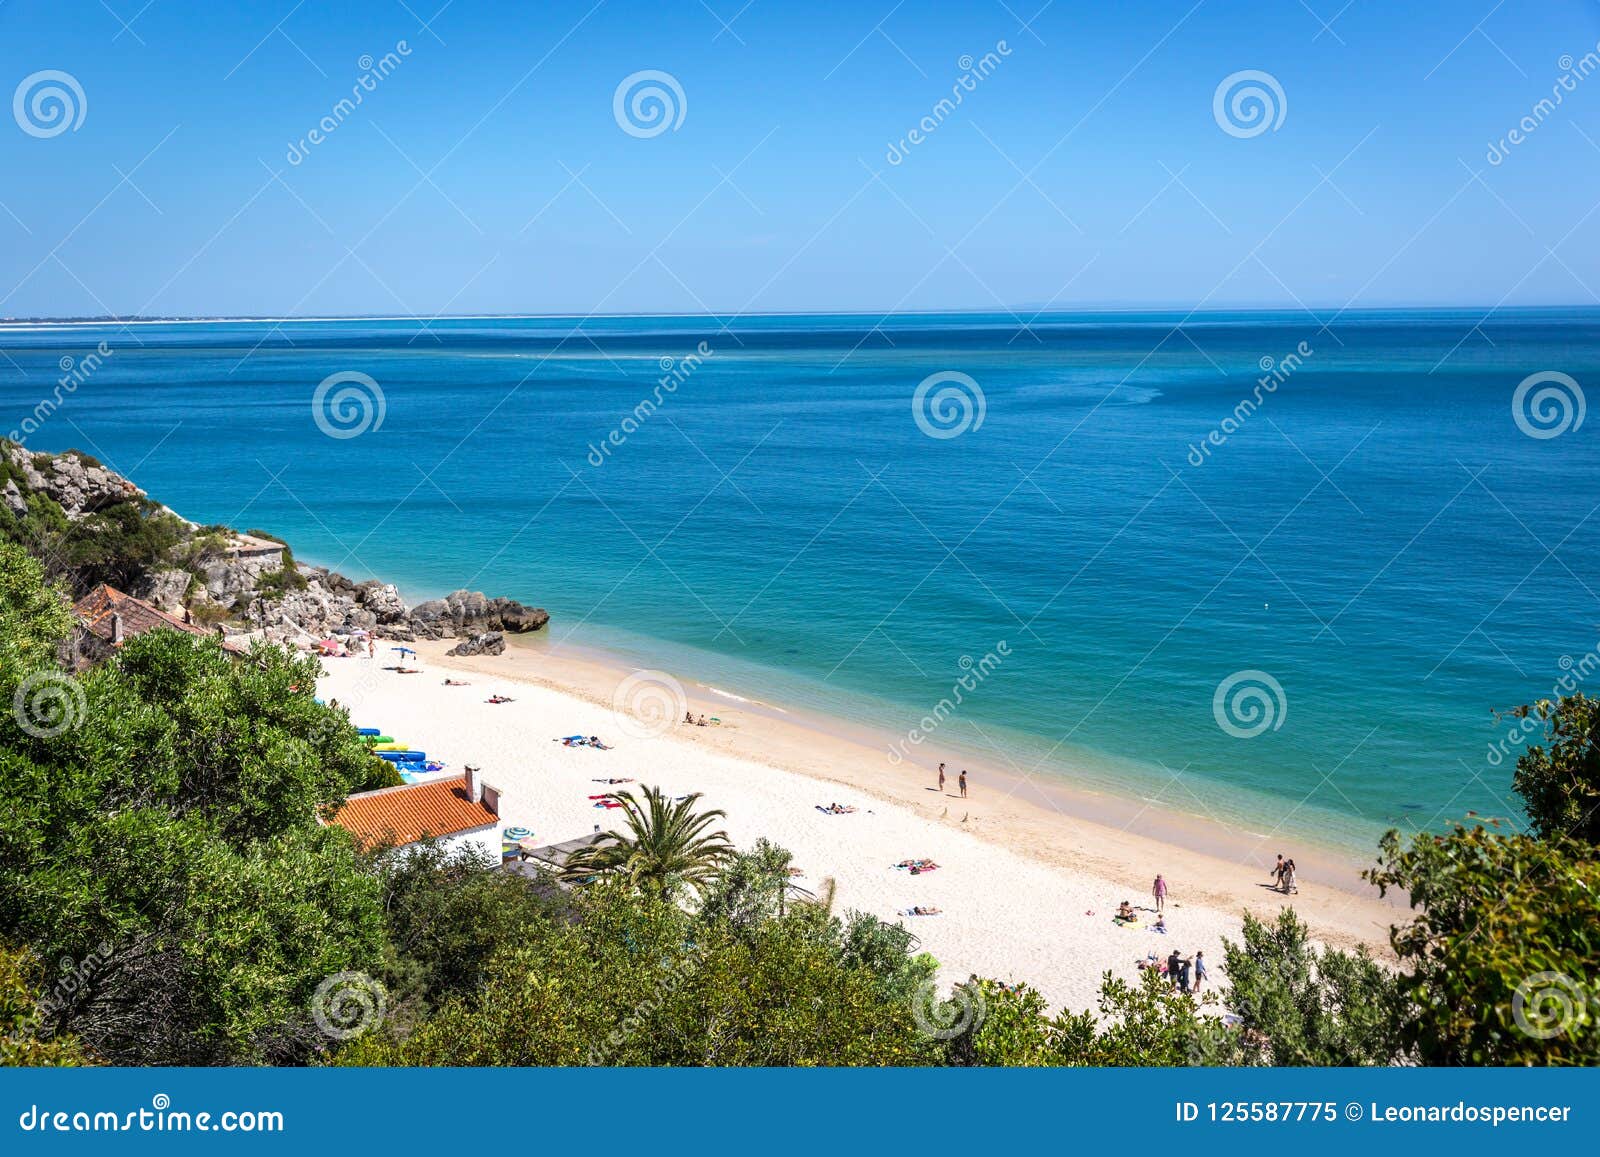 beautiful day in galapinhos beach in arrÃÂ¡bida national park in portugal